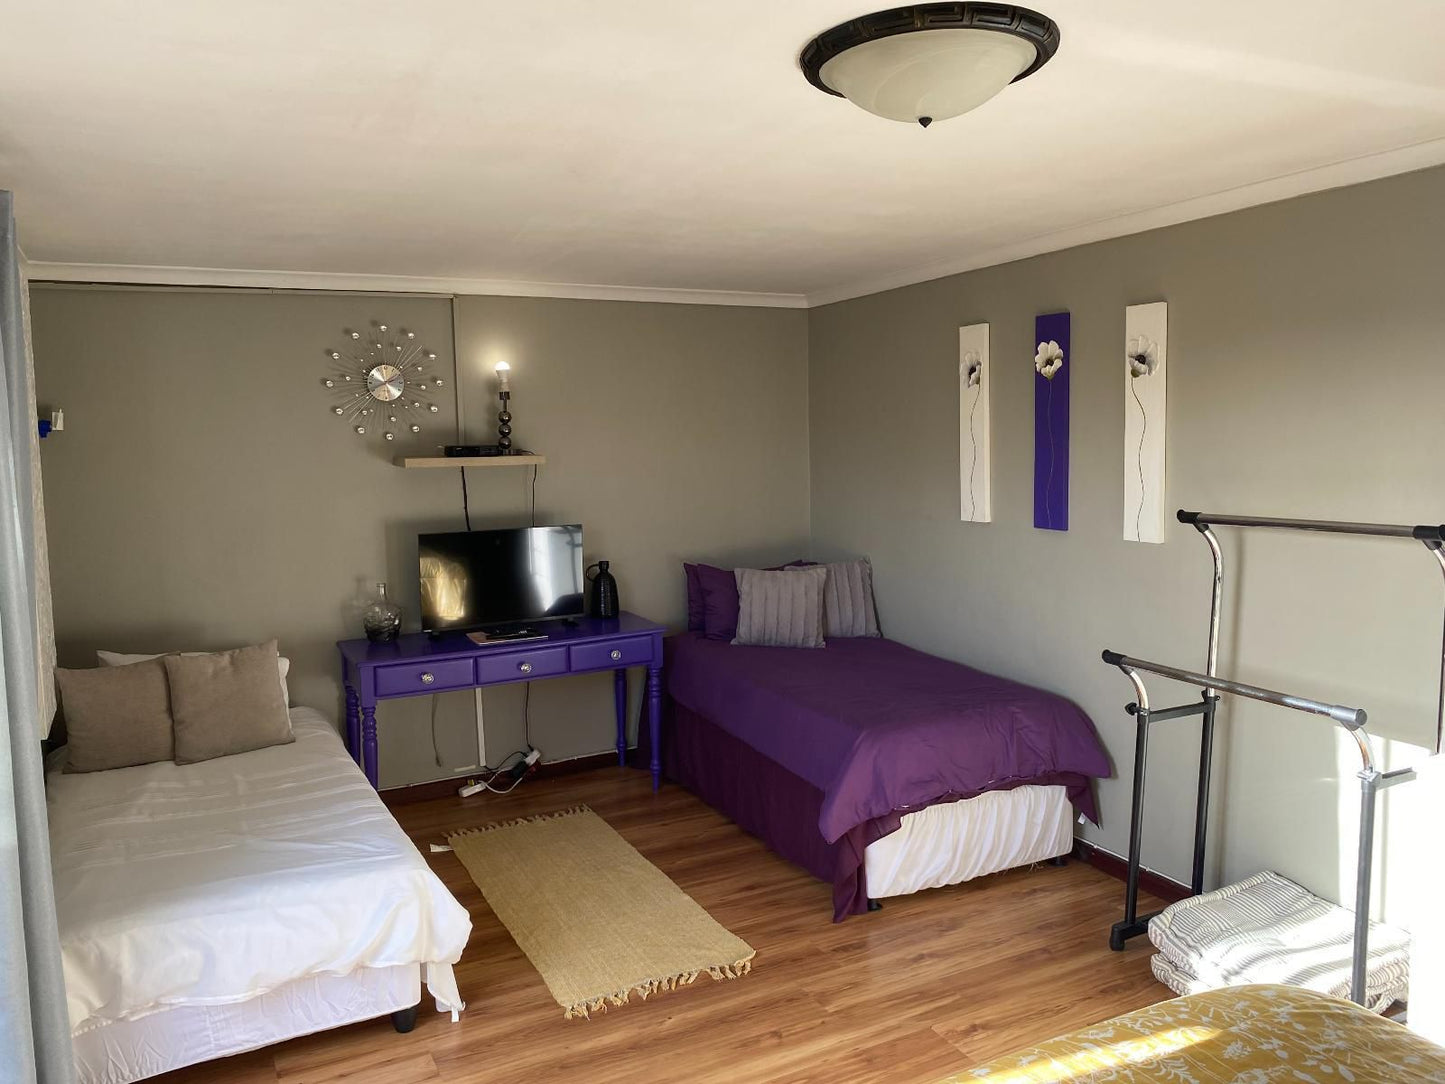 Azura Sleep Brackenfell Cape Town Western Cape South Africa Bedroom